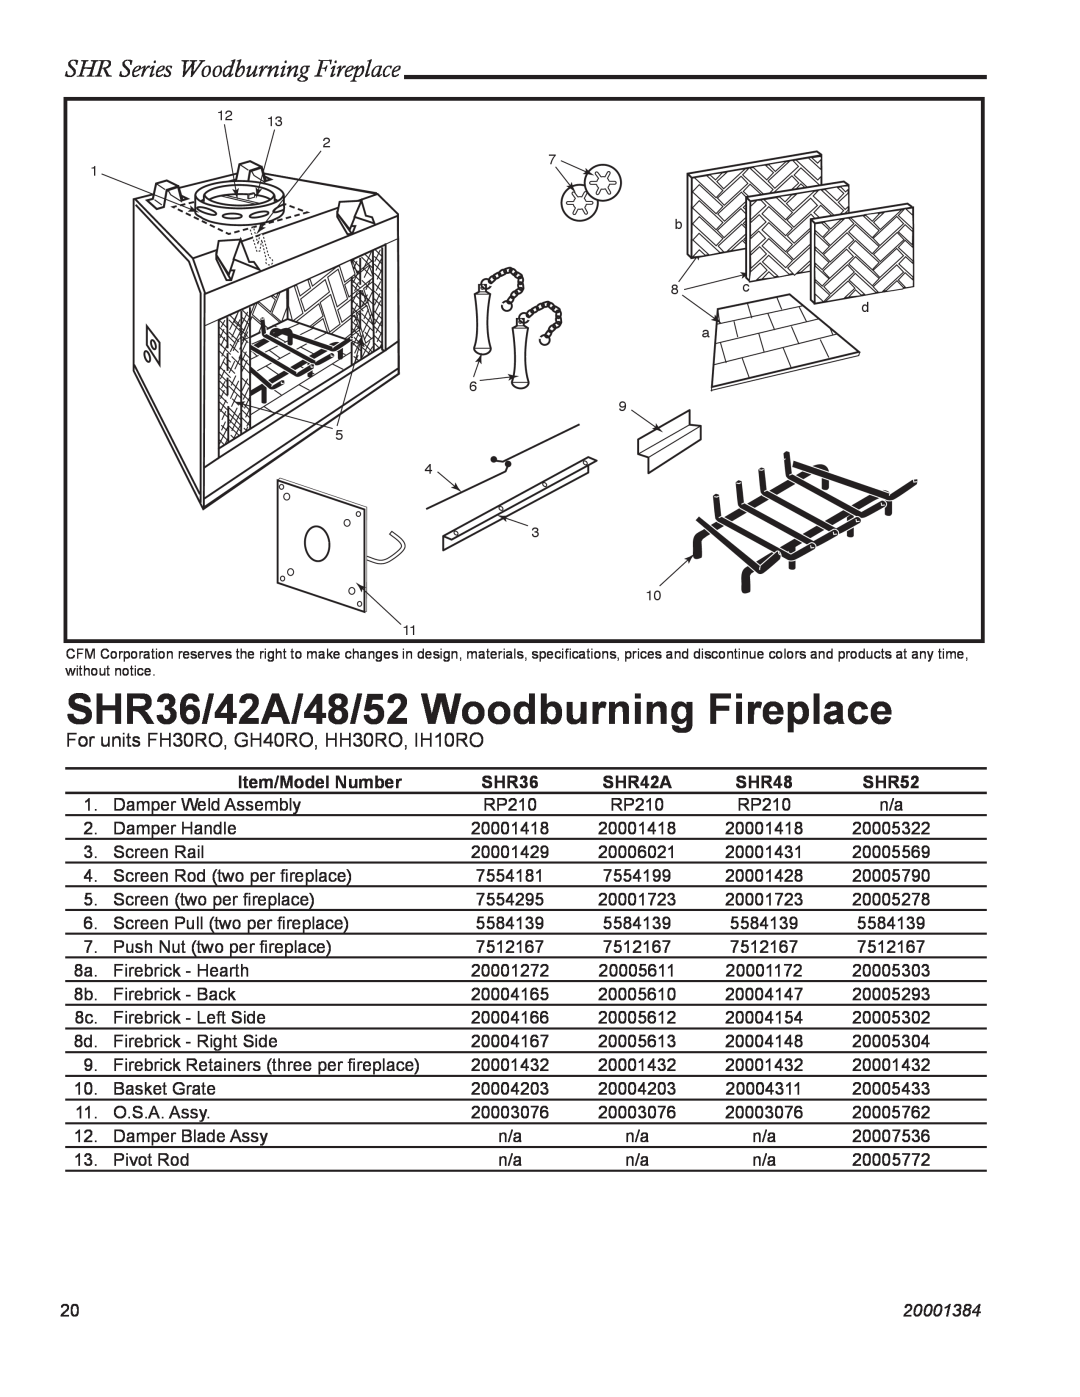 Vermont Casting SHR52 SHR36/42A/48/52 Woodburning Fireplace, SHR Series Woodburning Fireplace, Item/Model Number, SHR42A 